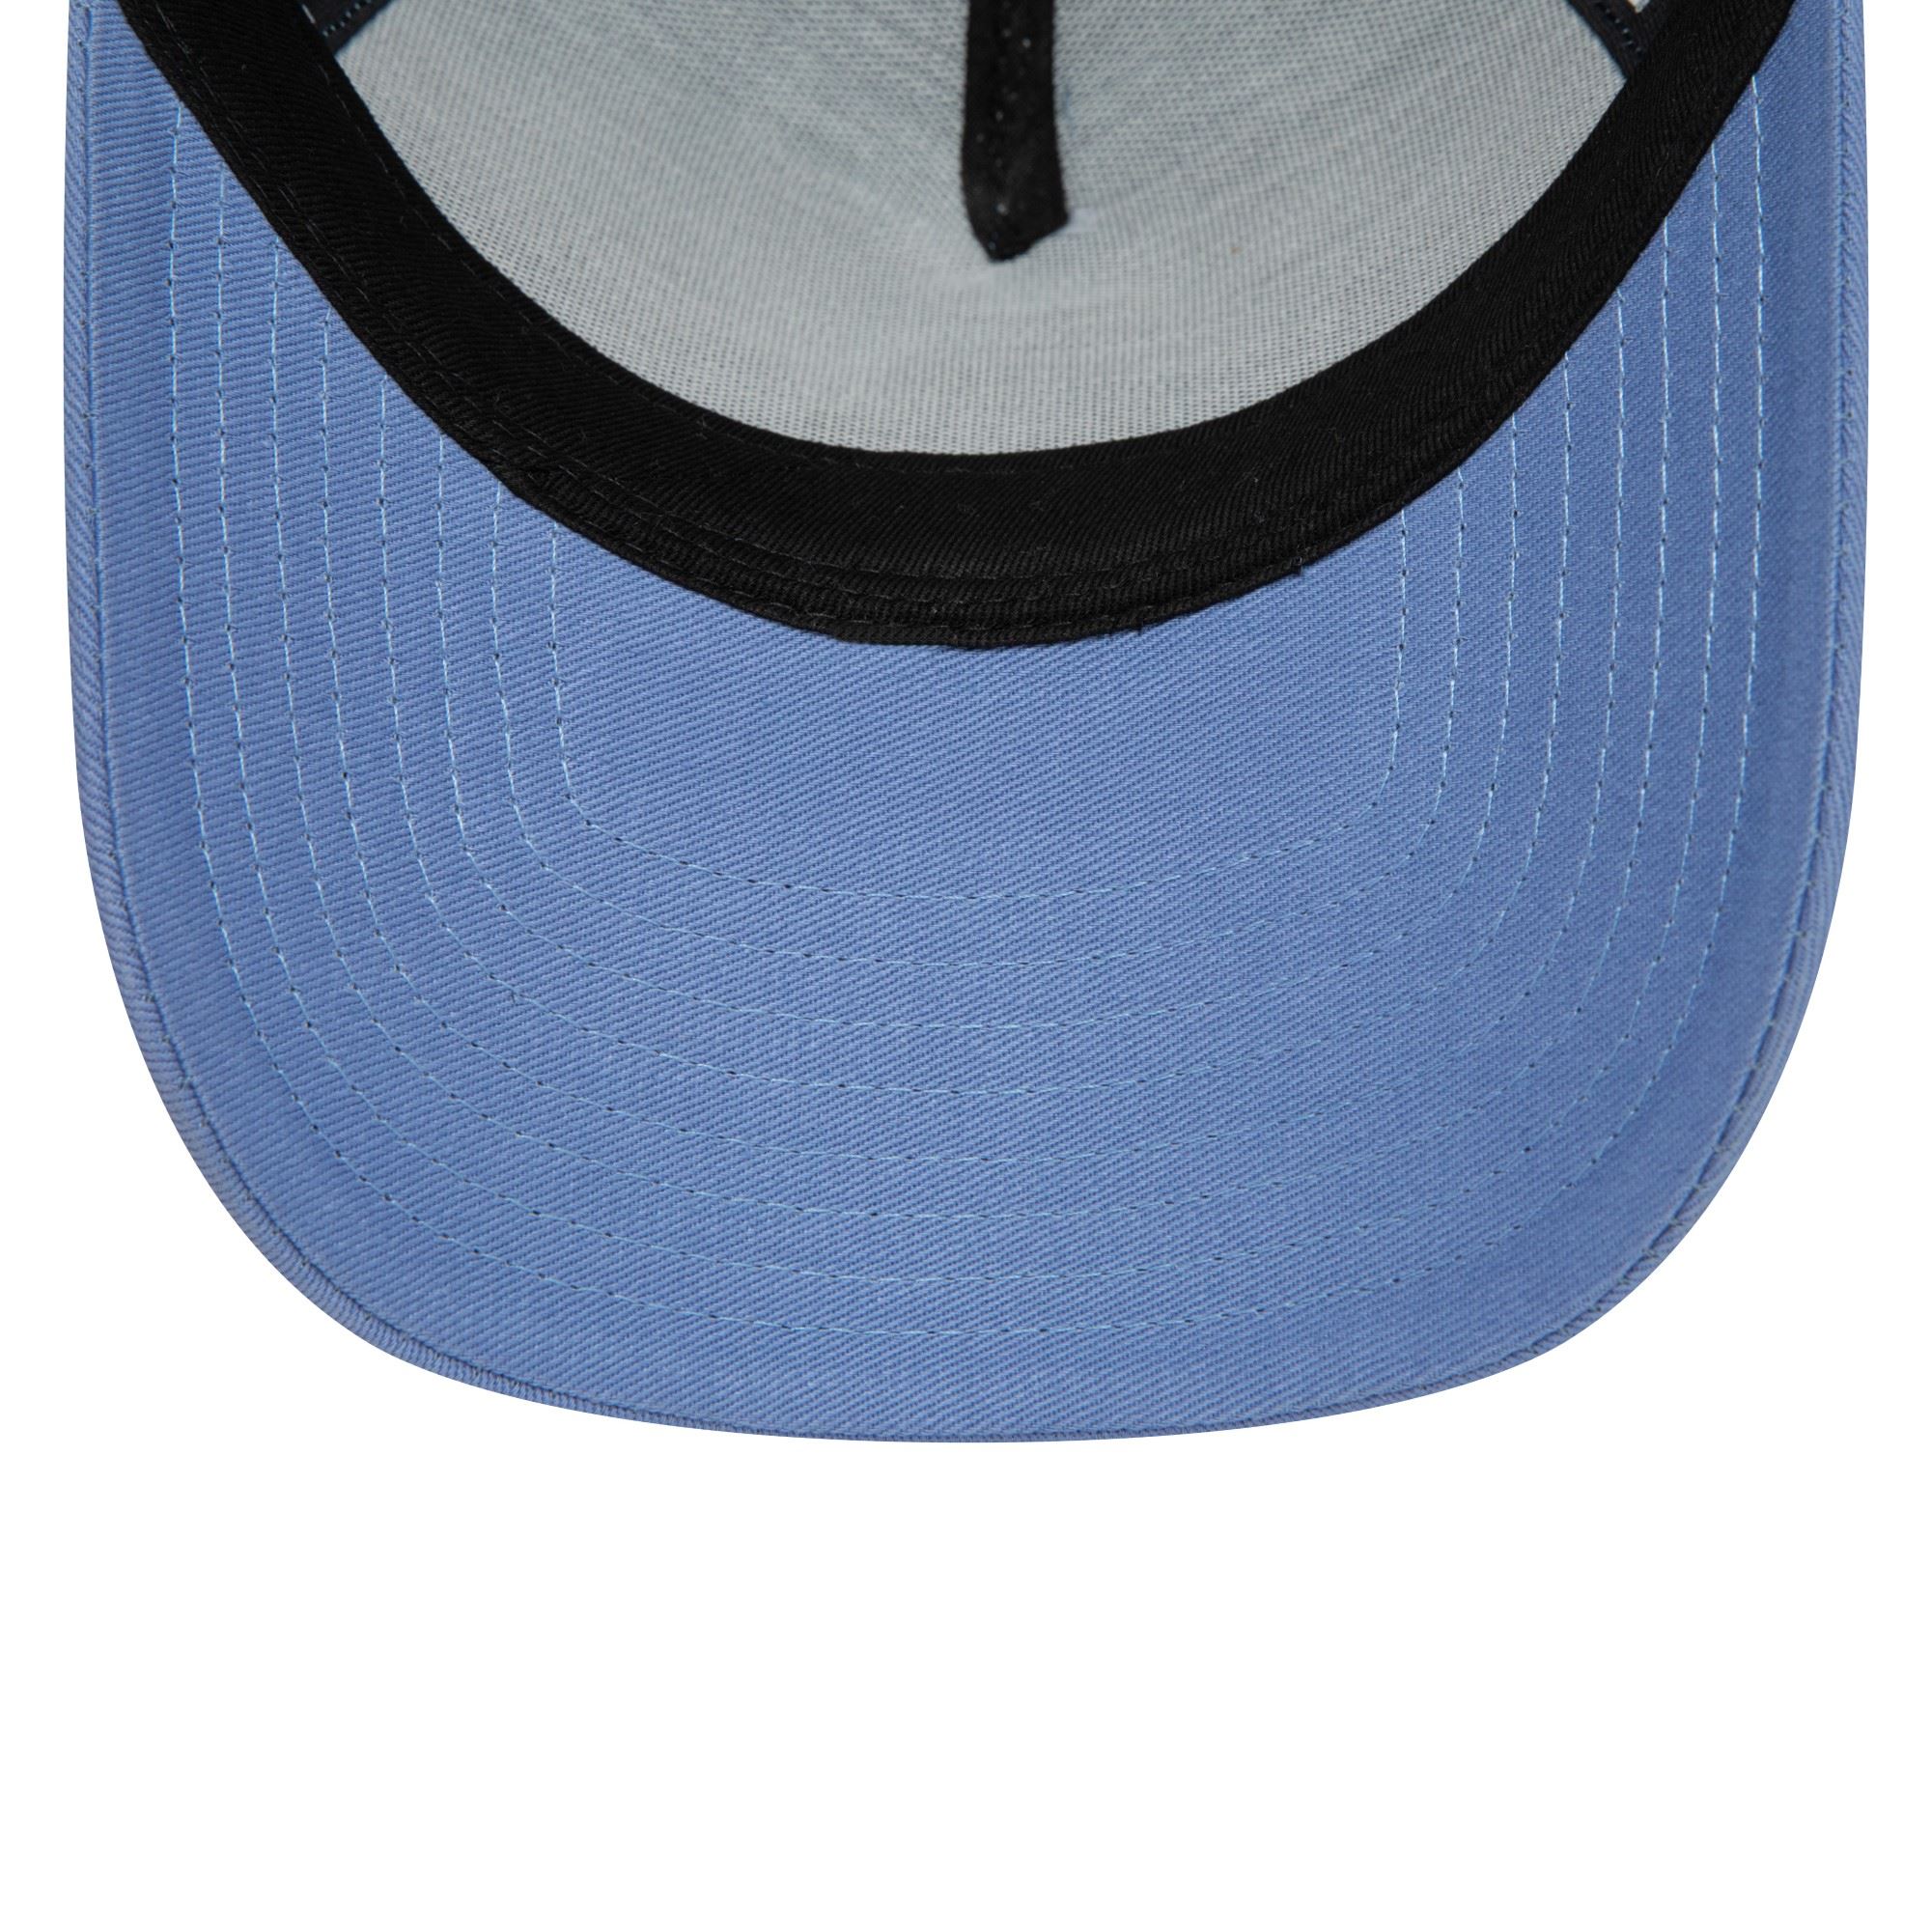 Los Angeles Dodgers MLB Seasonal Blue E-Frame Adjustable Cap New Era